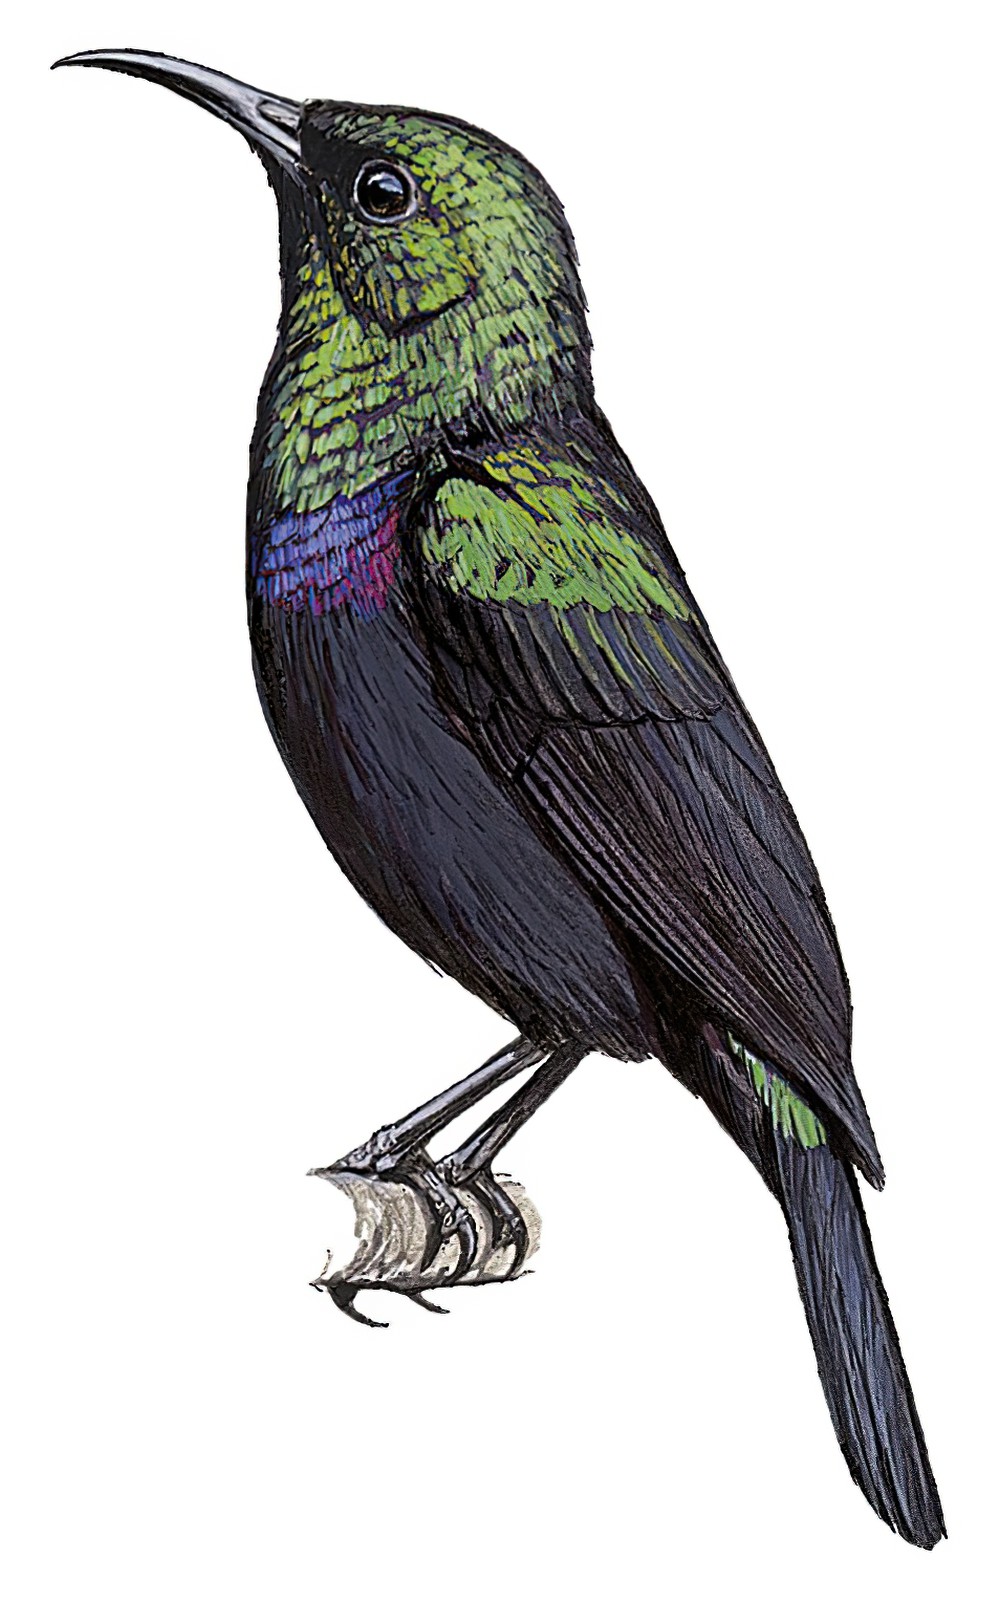 Tsavo Sunbird / Cinnyris tsavoensis